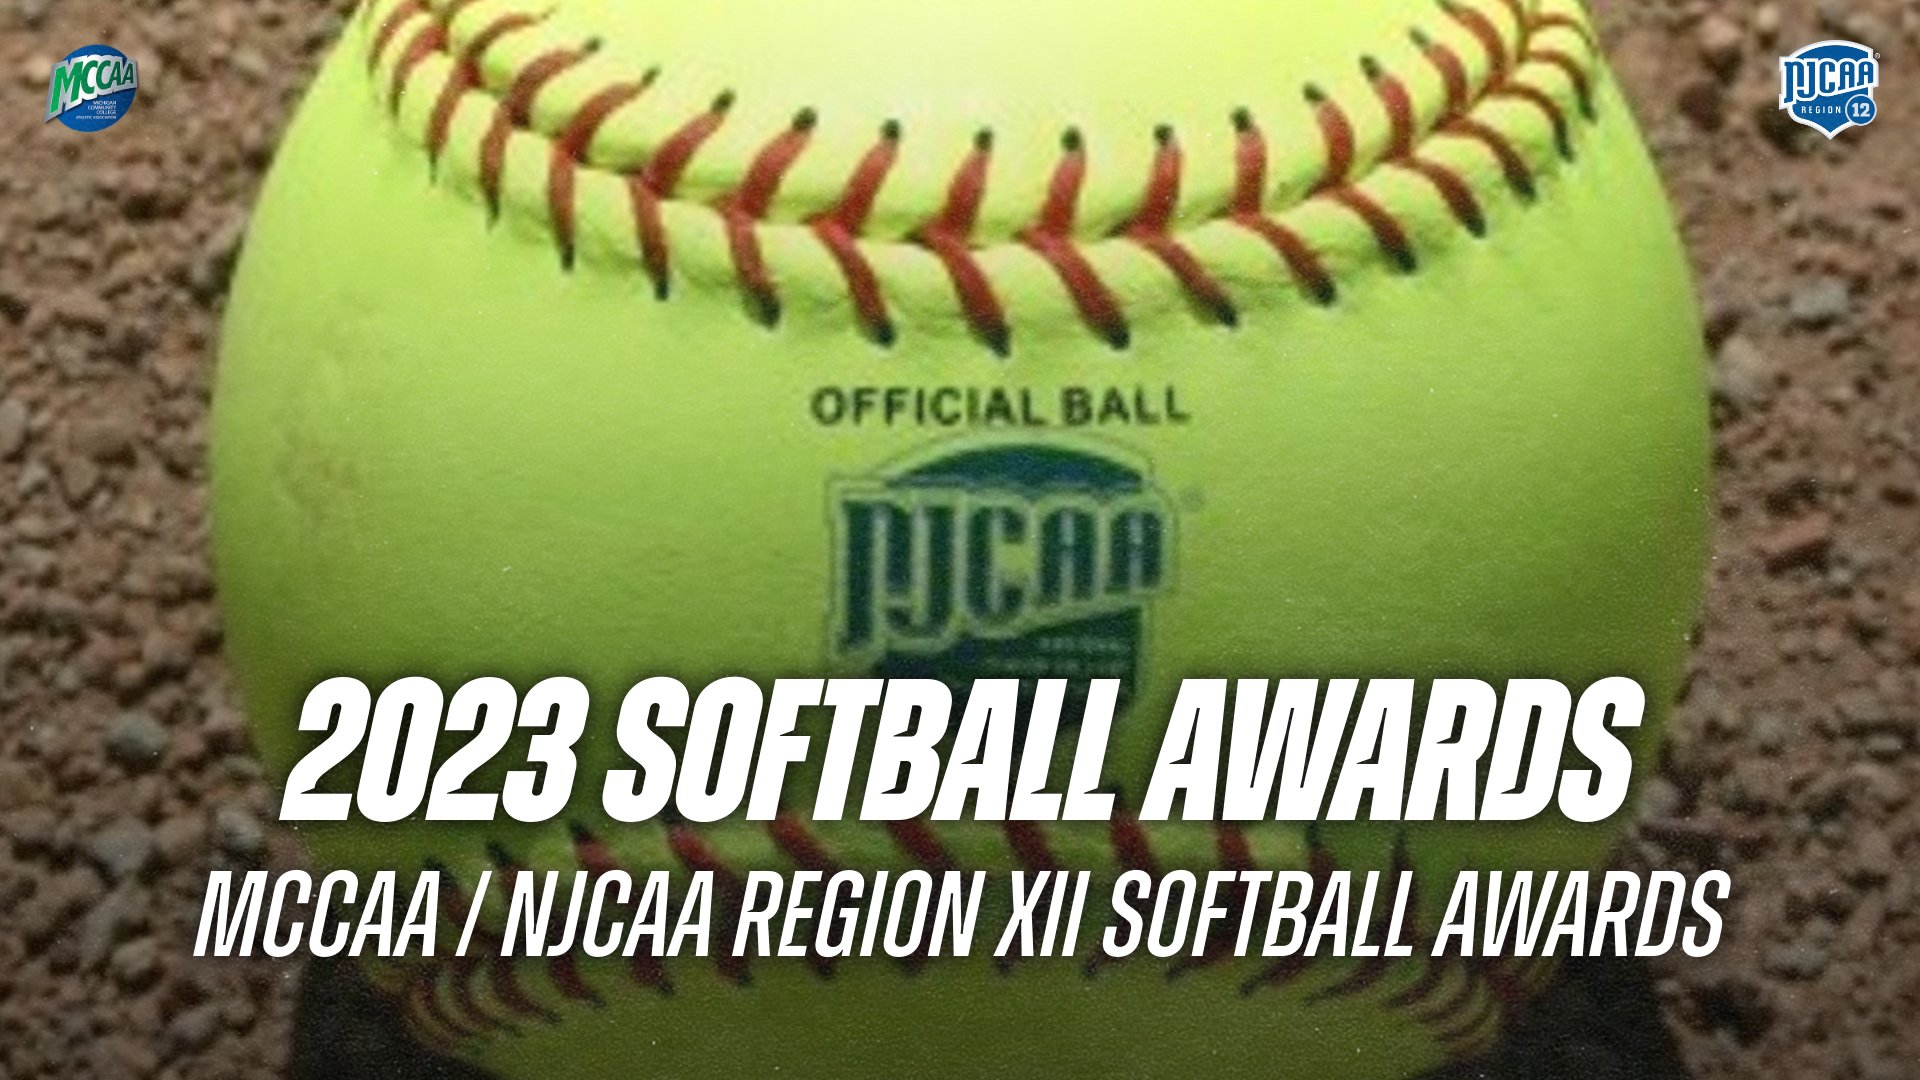 2023 MCCAA / NJCAA Region XII Softball Awards Have Been Released